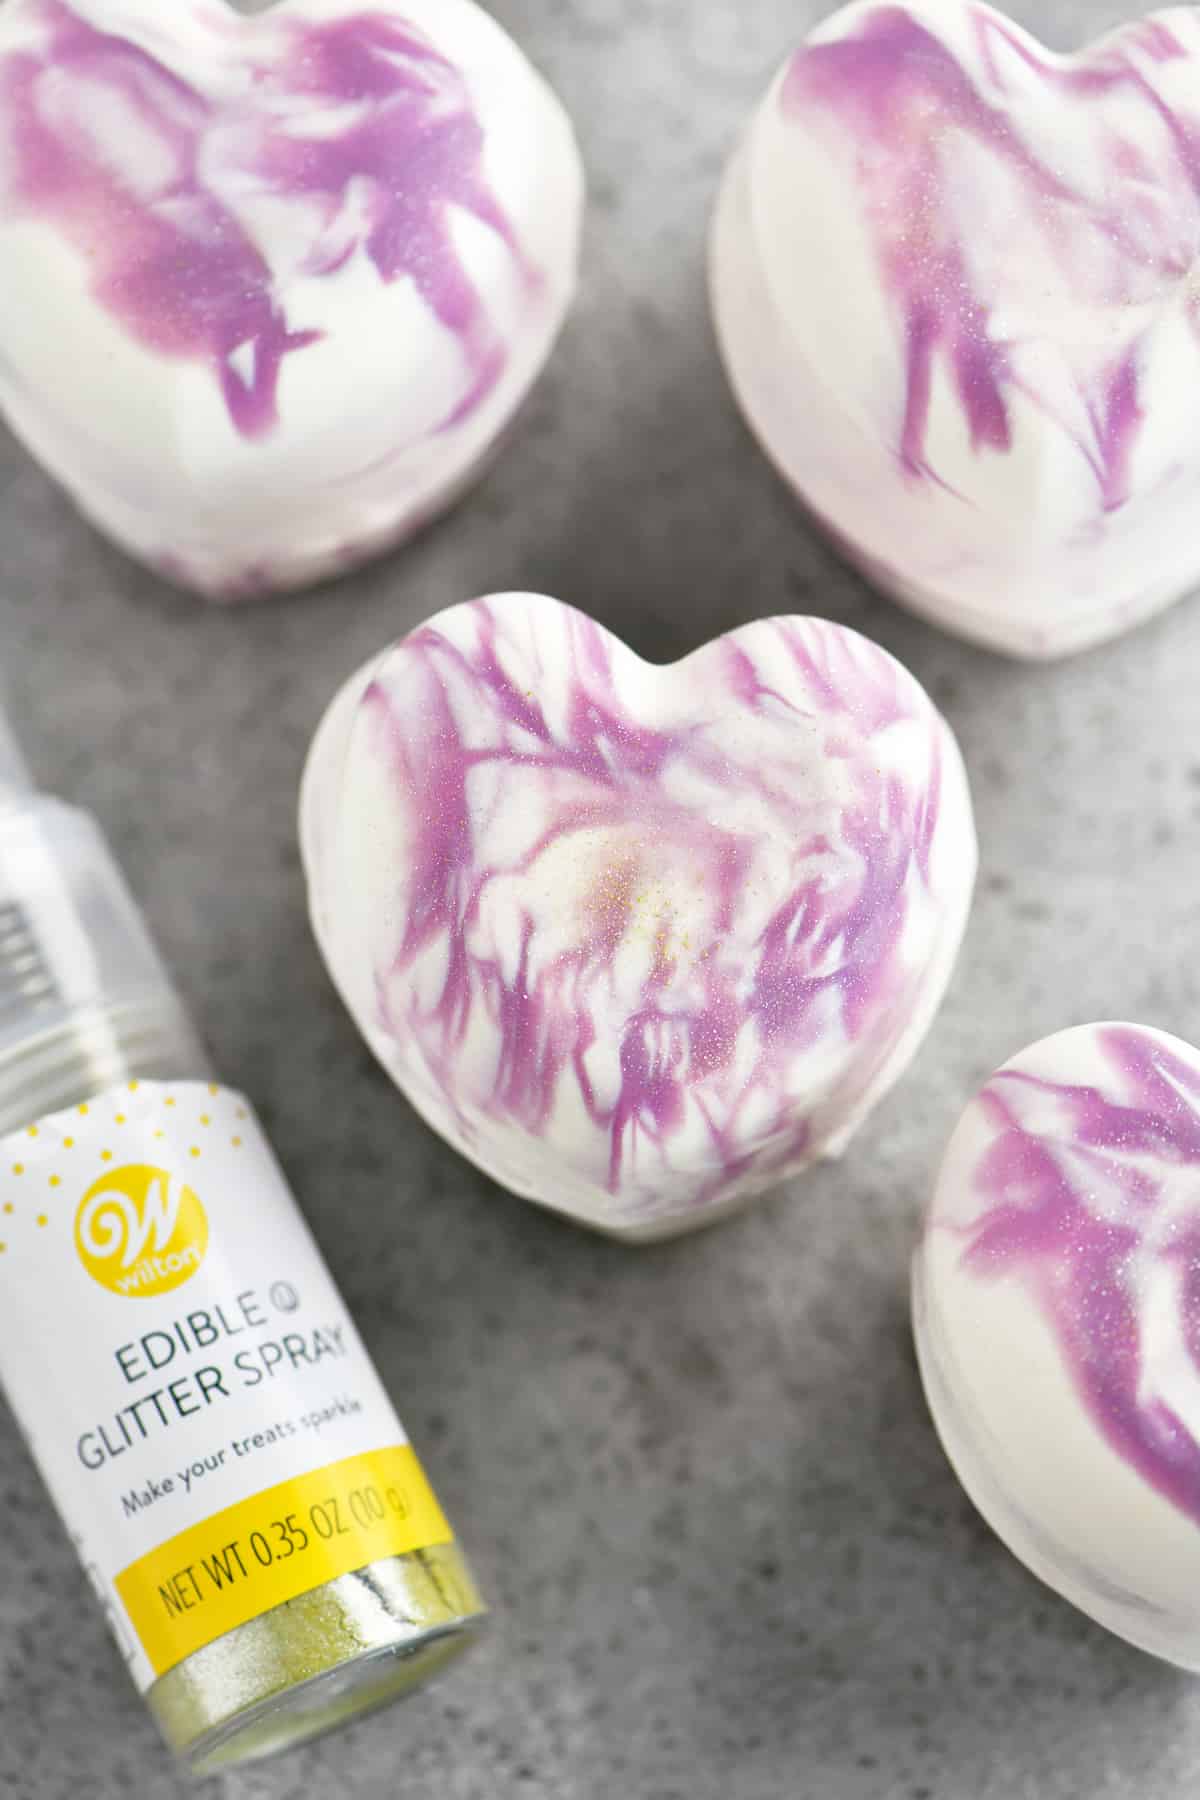 edible glitter spray on purple and white swirled breakable chocolate hearts